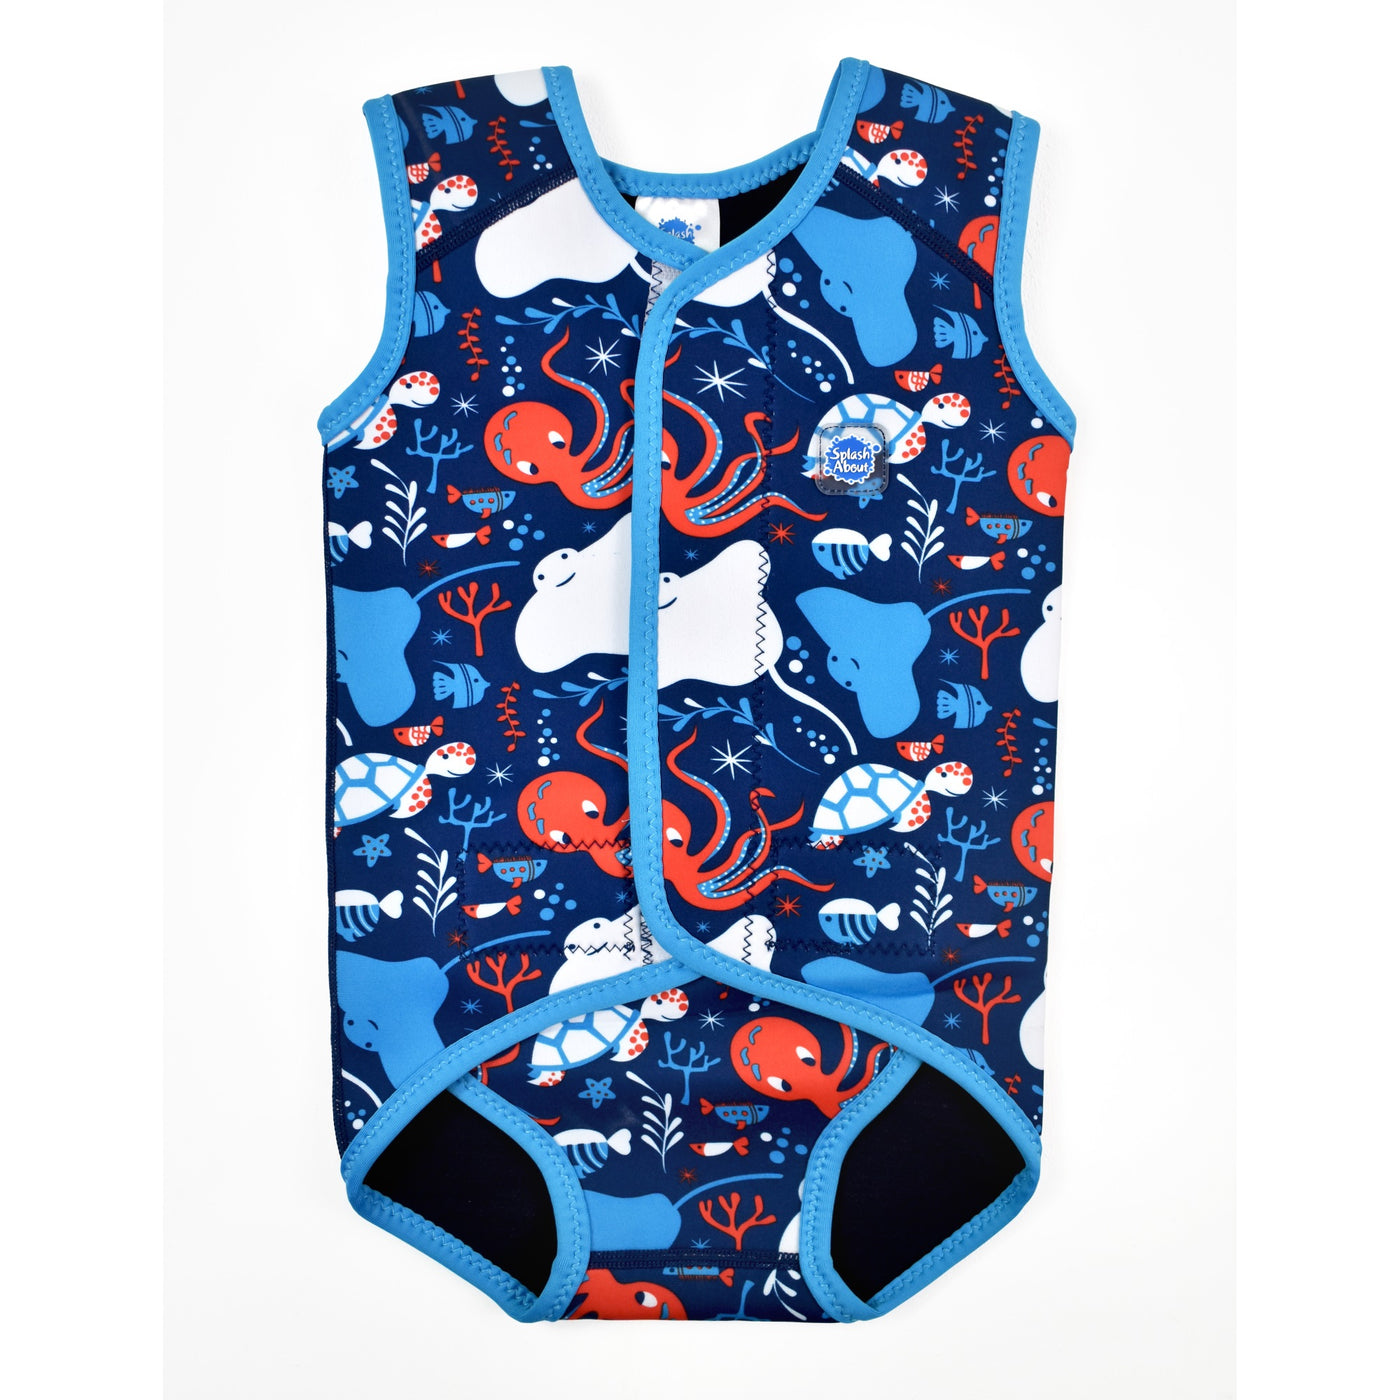 Neoprene baby swim wrap in blue sea creature print